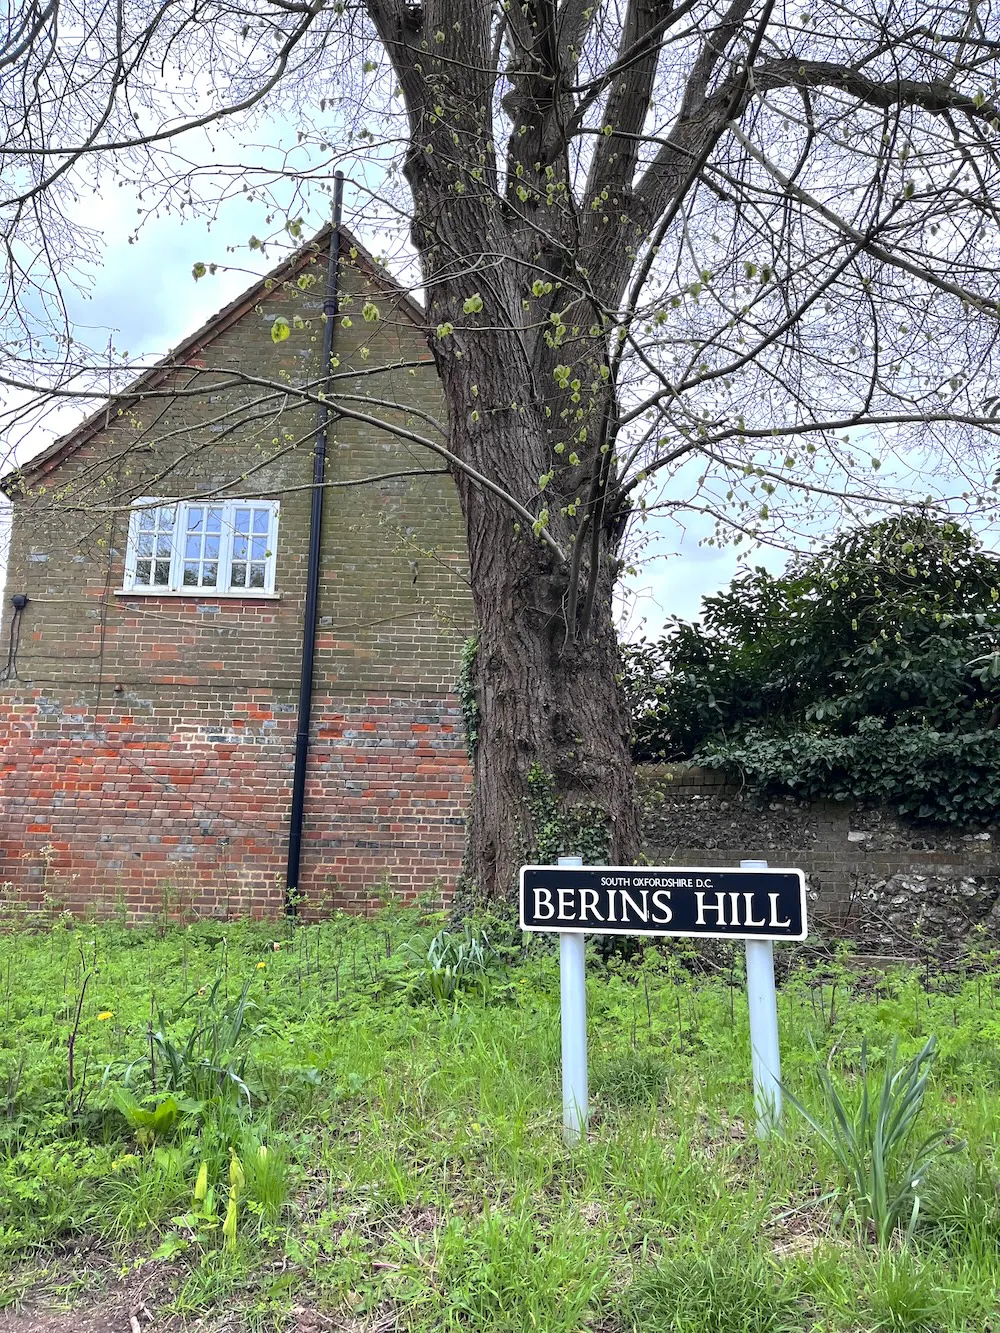 The street named after Berin's or Beren's Hill, Ipsden, Oxfordshire  (Photo © John Garth)